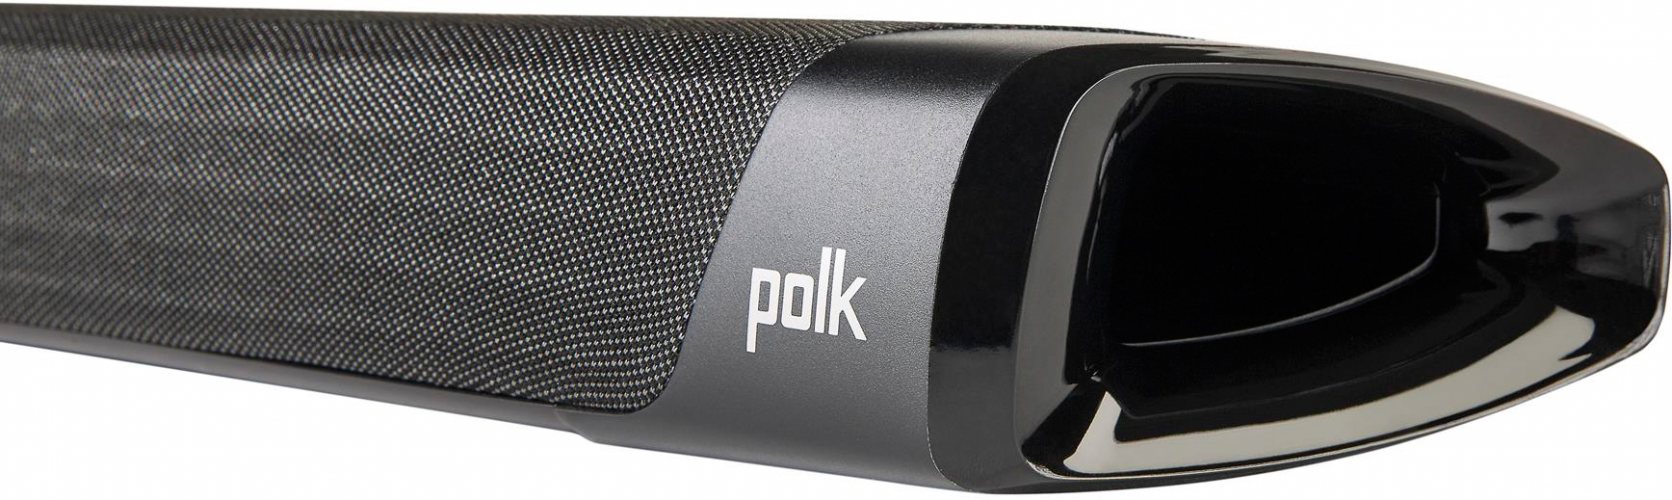 Polk Audio MagniFi MAX саундбар вид сбоку